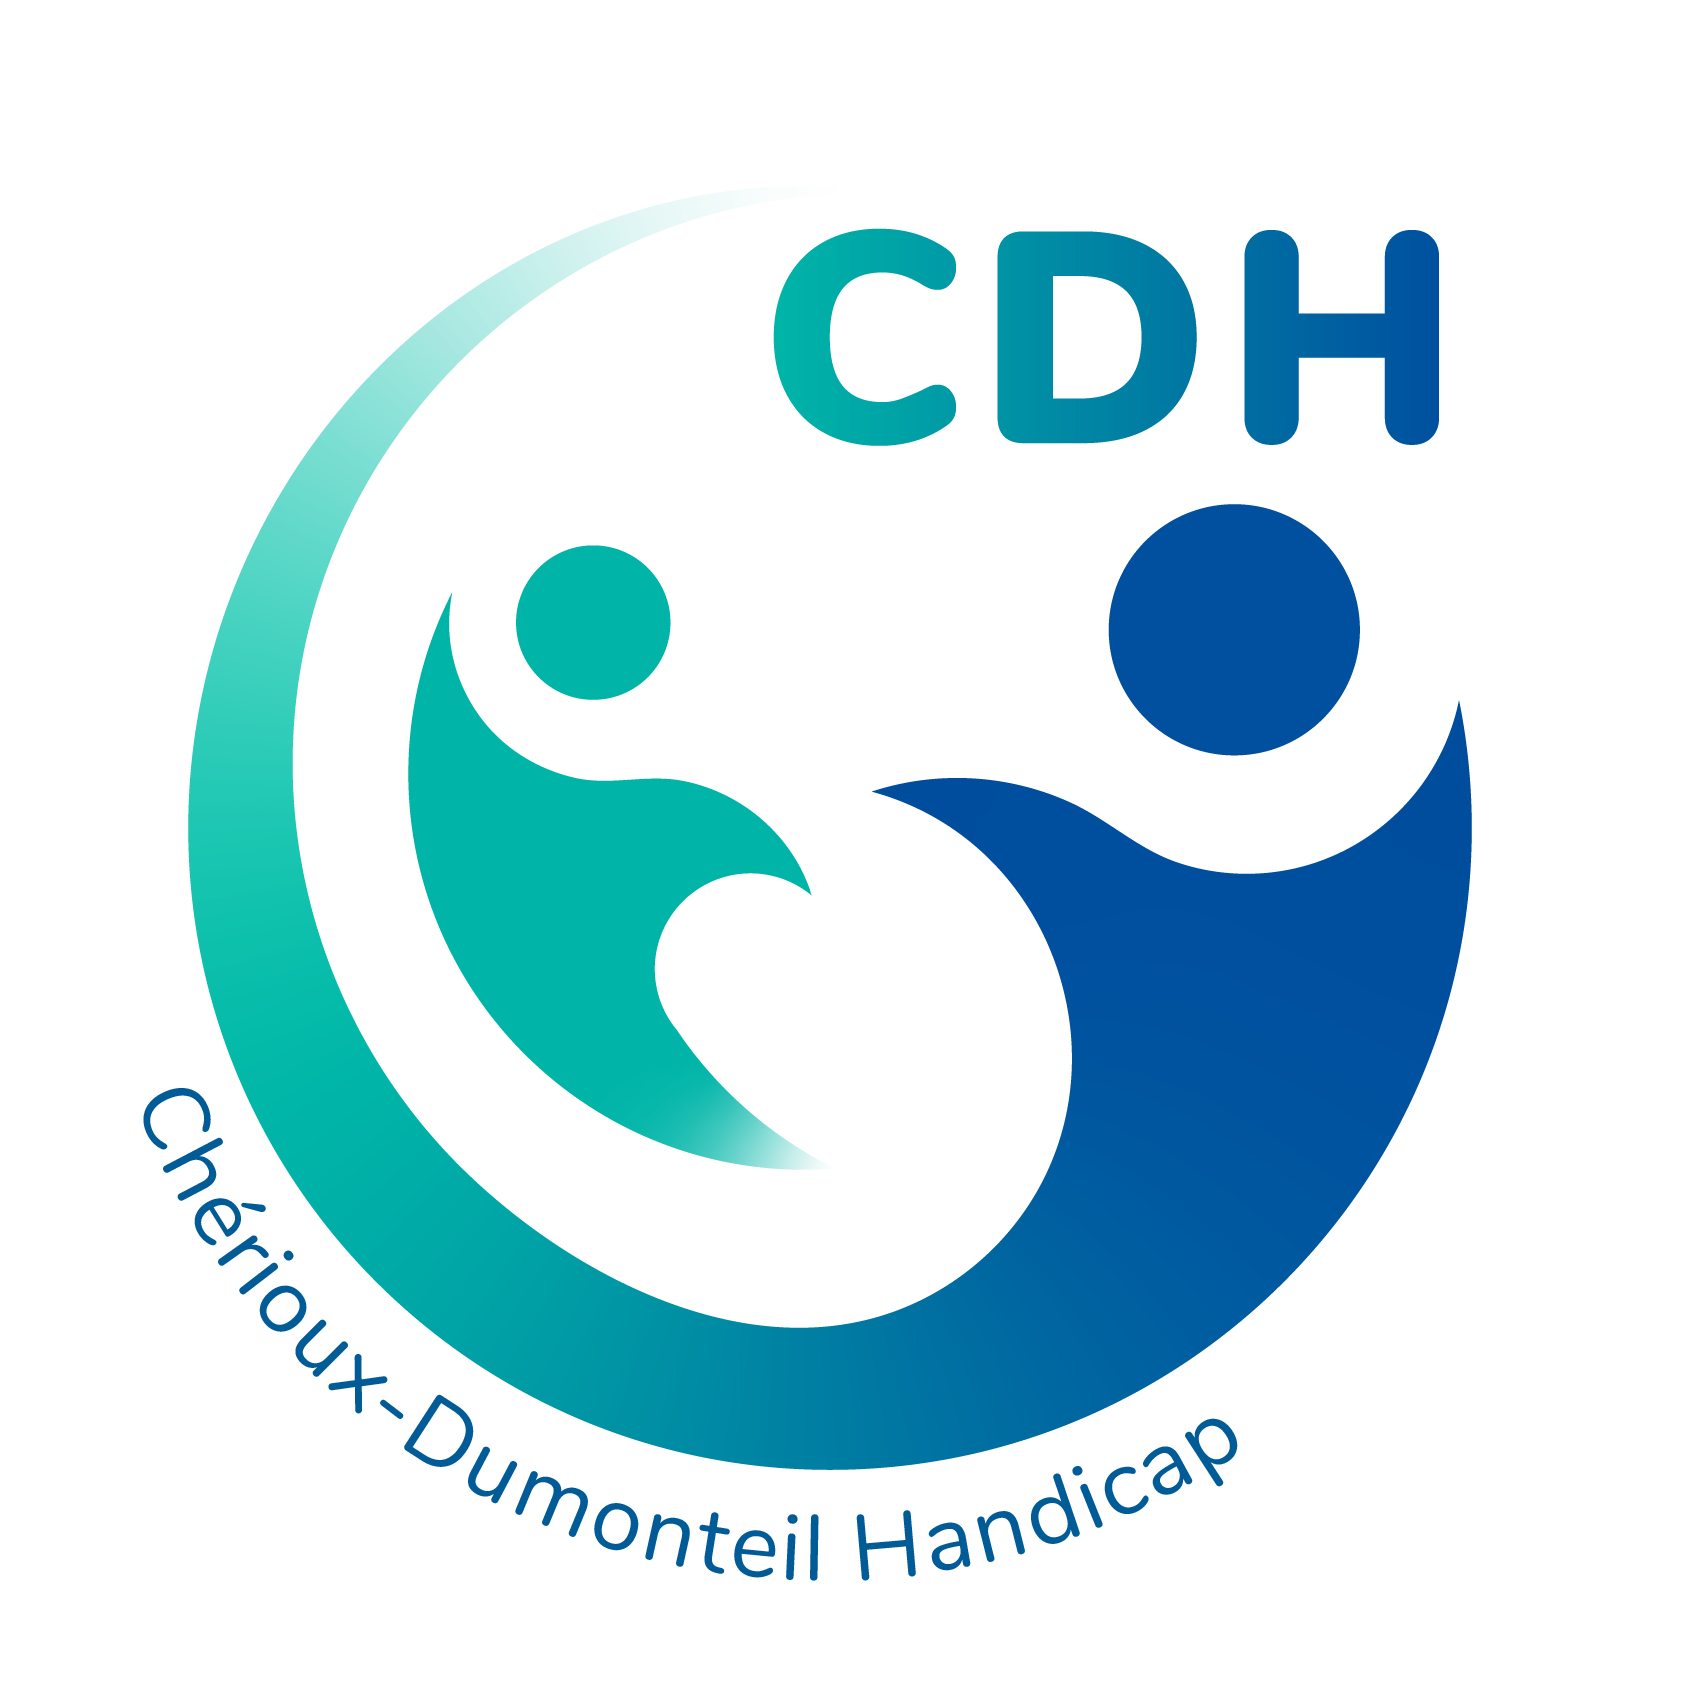 Association Chérioux-Dumonteil Handicap logo